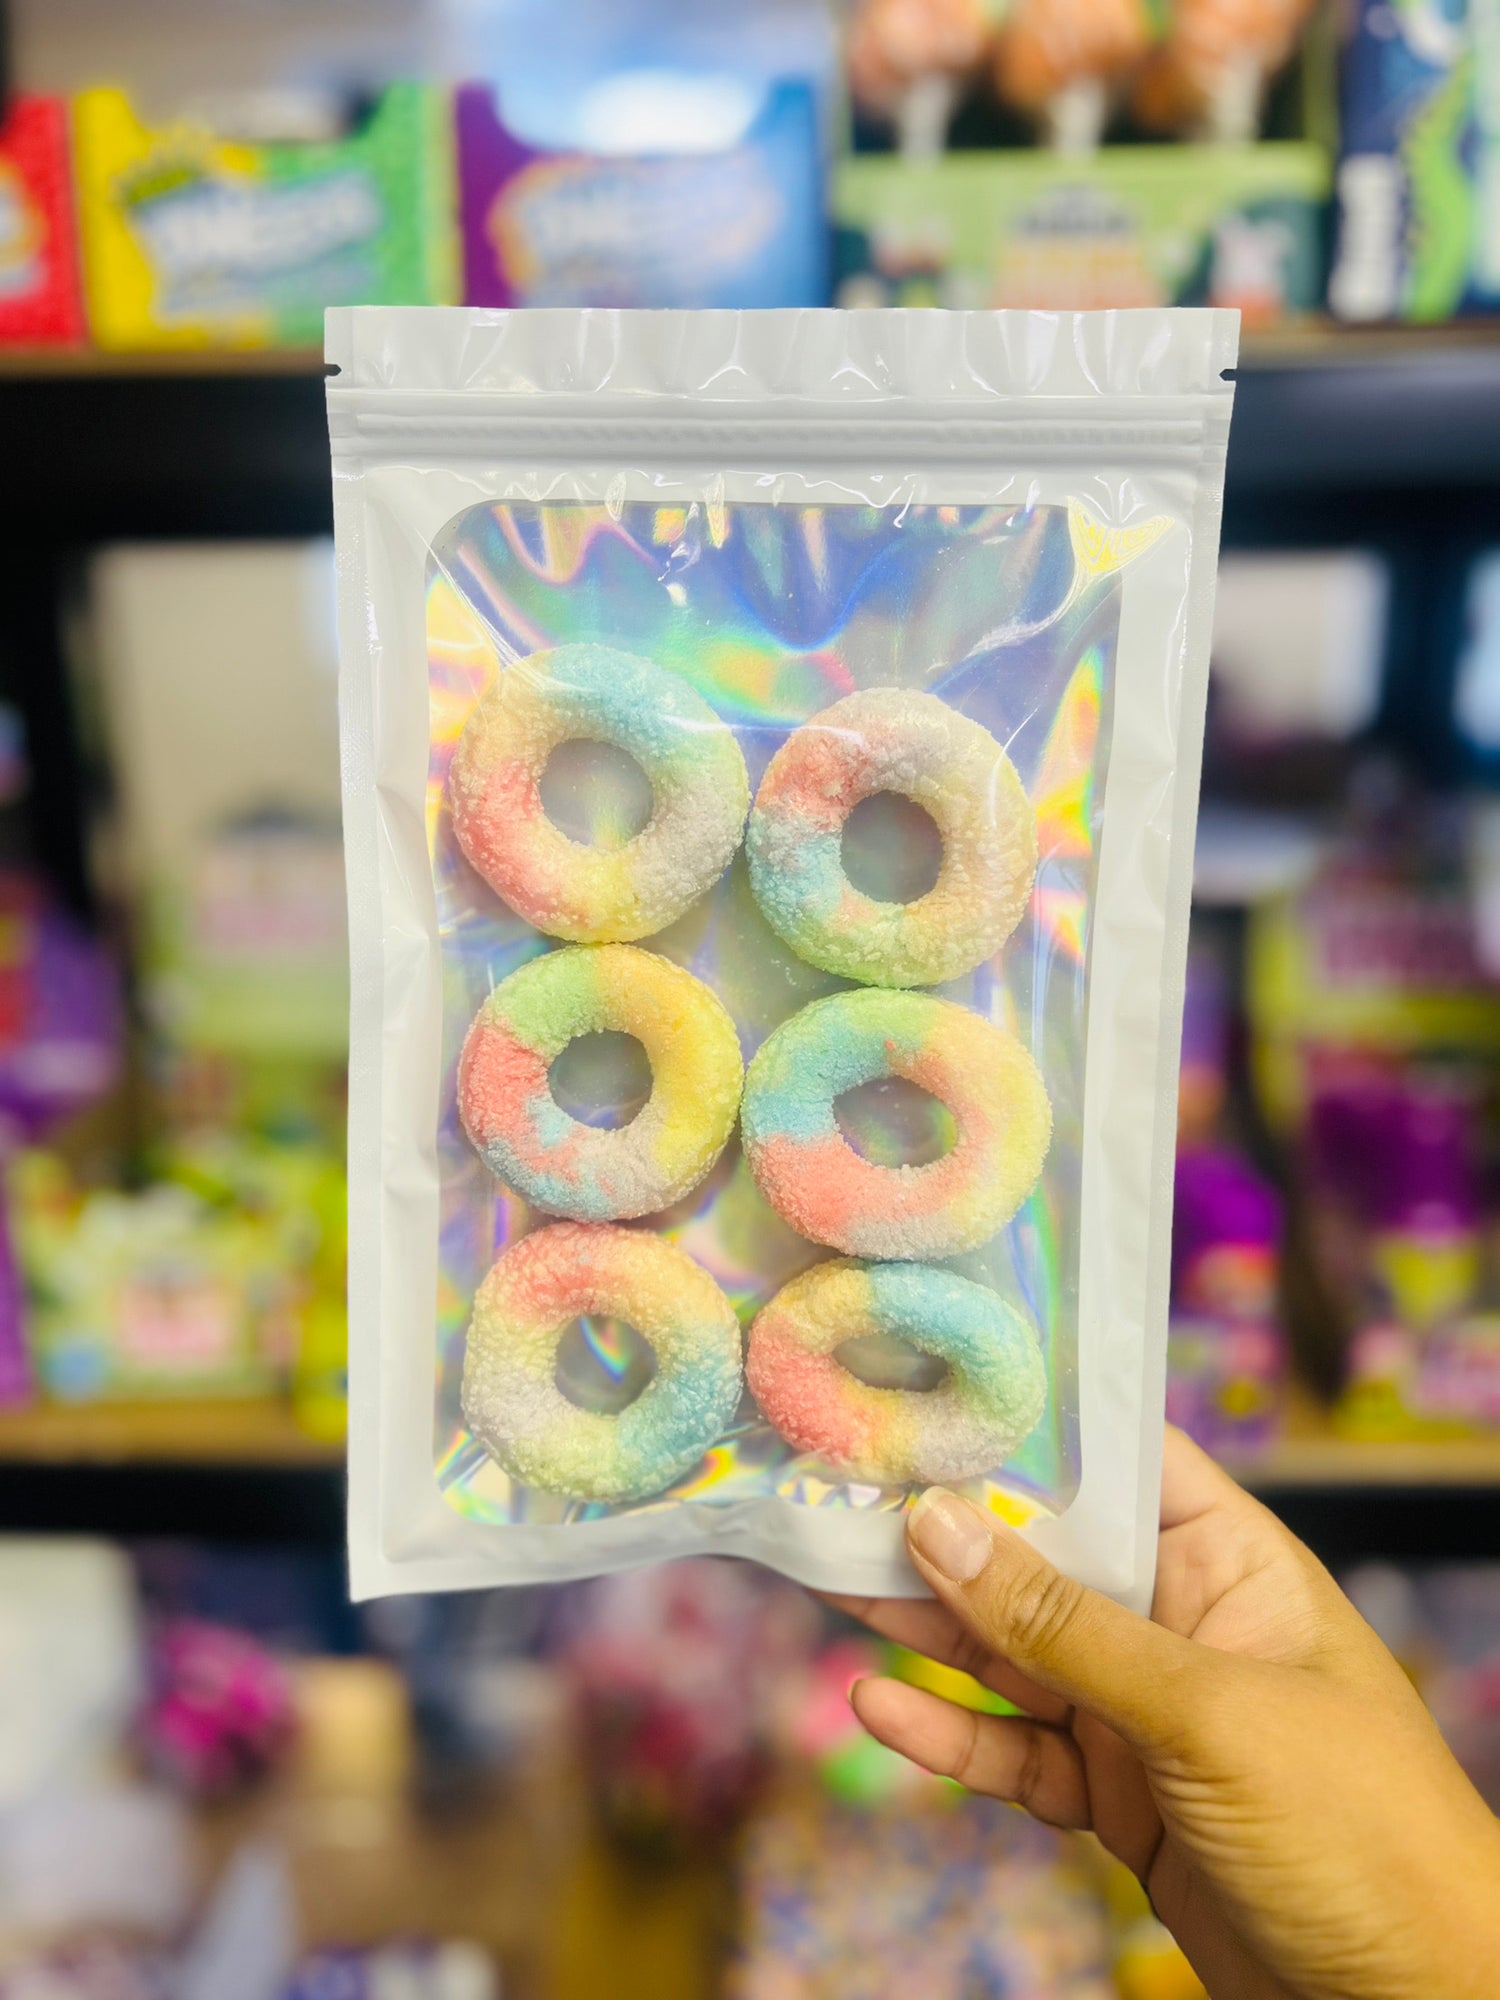 Rainbow Rings Freeze Dried Candy (Halal)